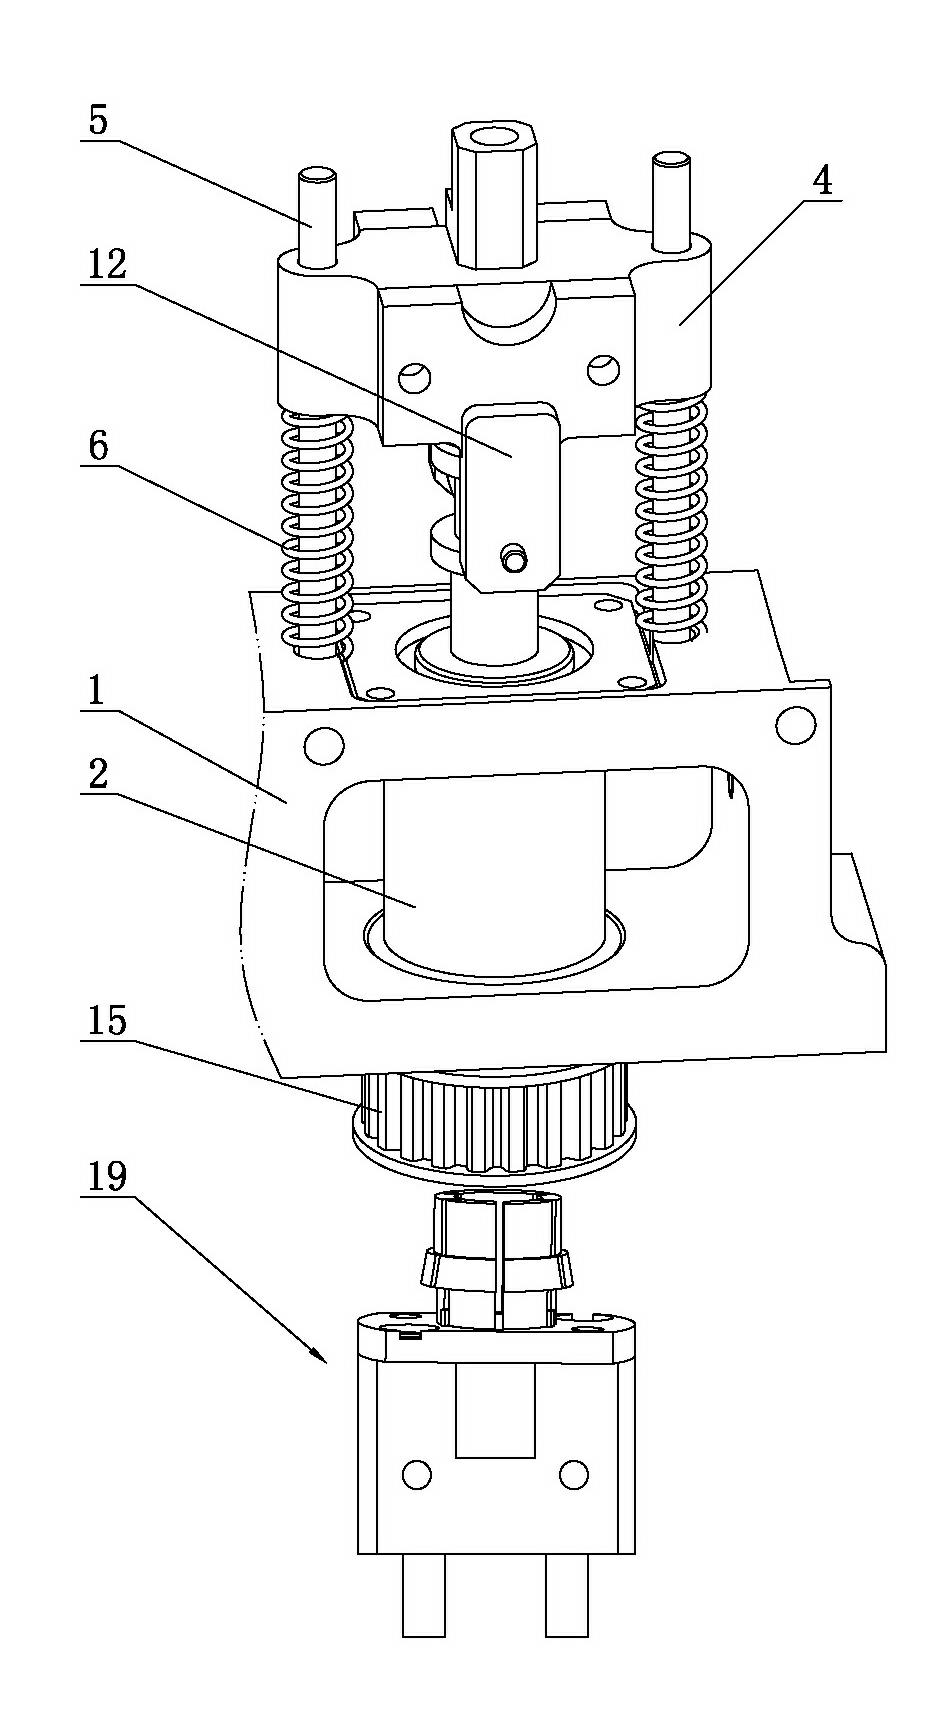 Head gripper linking mechanism of plug-in machine